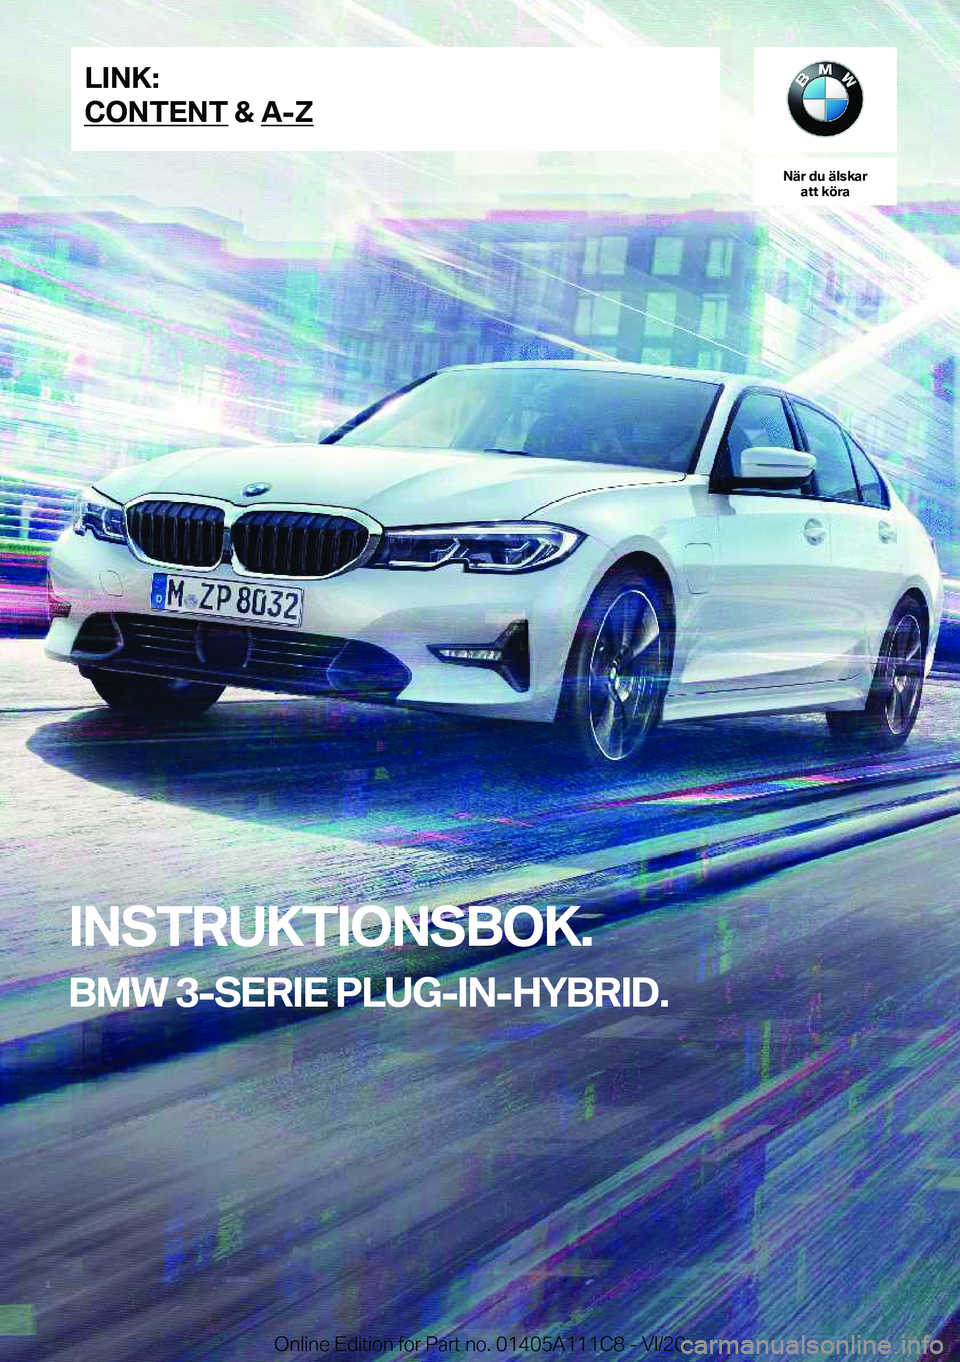 BMW 3 SERIES SEDAN PLUG-IN HYBRID 2021  InstruktionsbÖcker (in Swedish) �N�ä�r��d�u��ä�l�s�k�a�r�a�t�t��k�